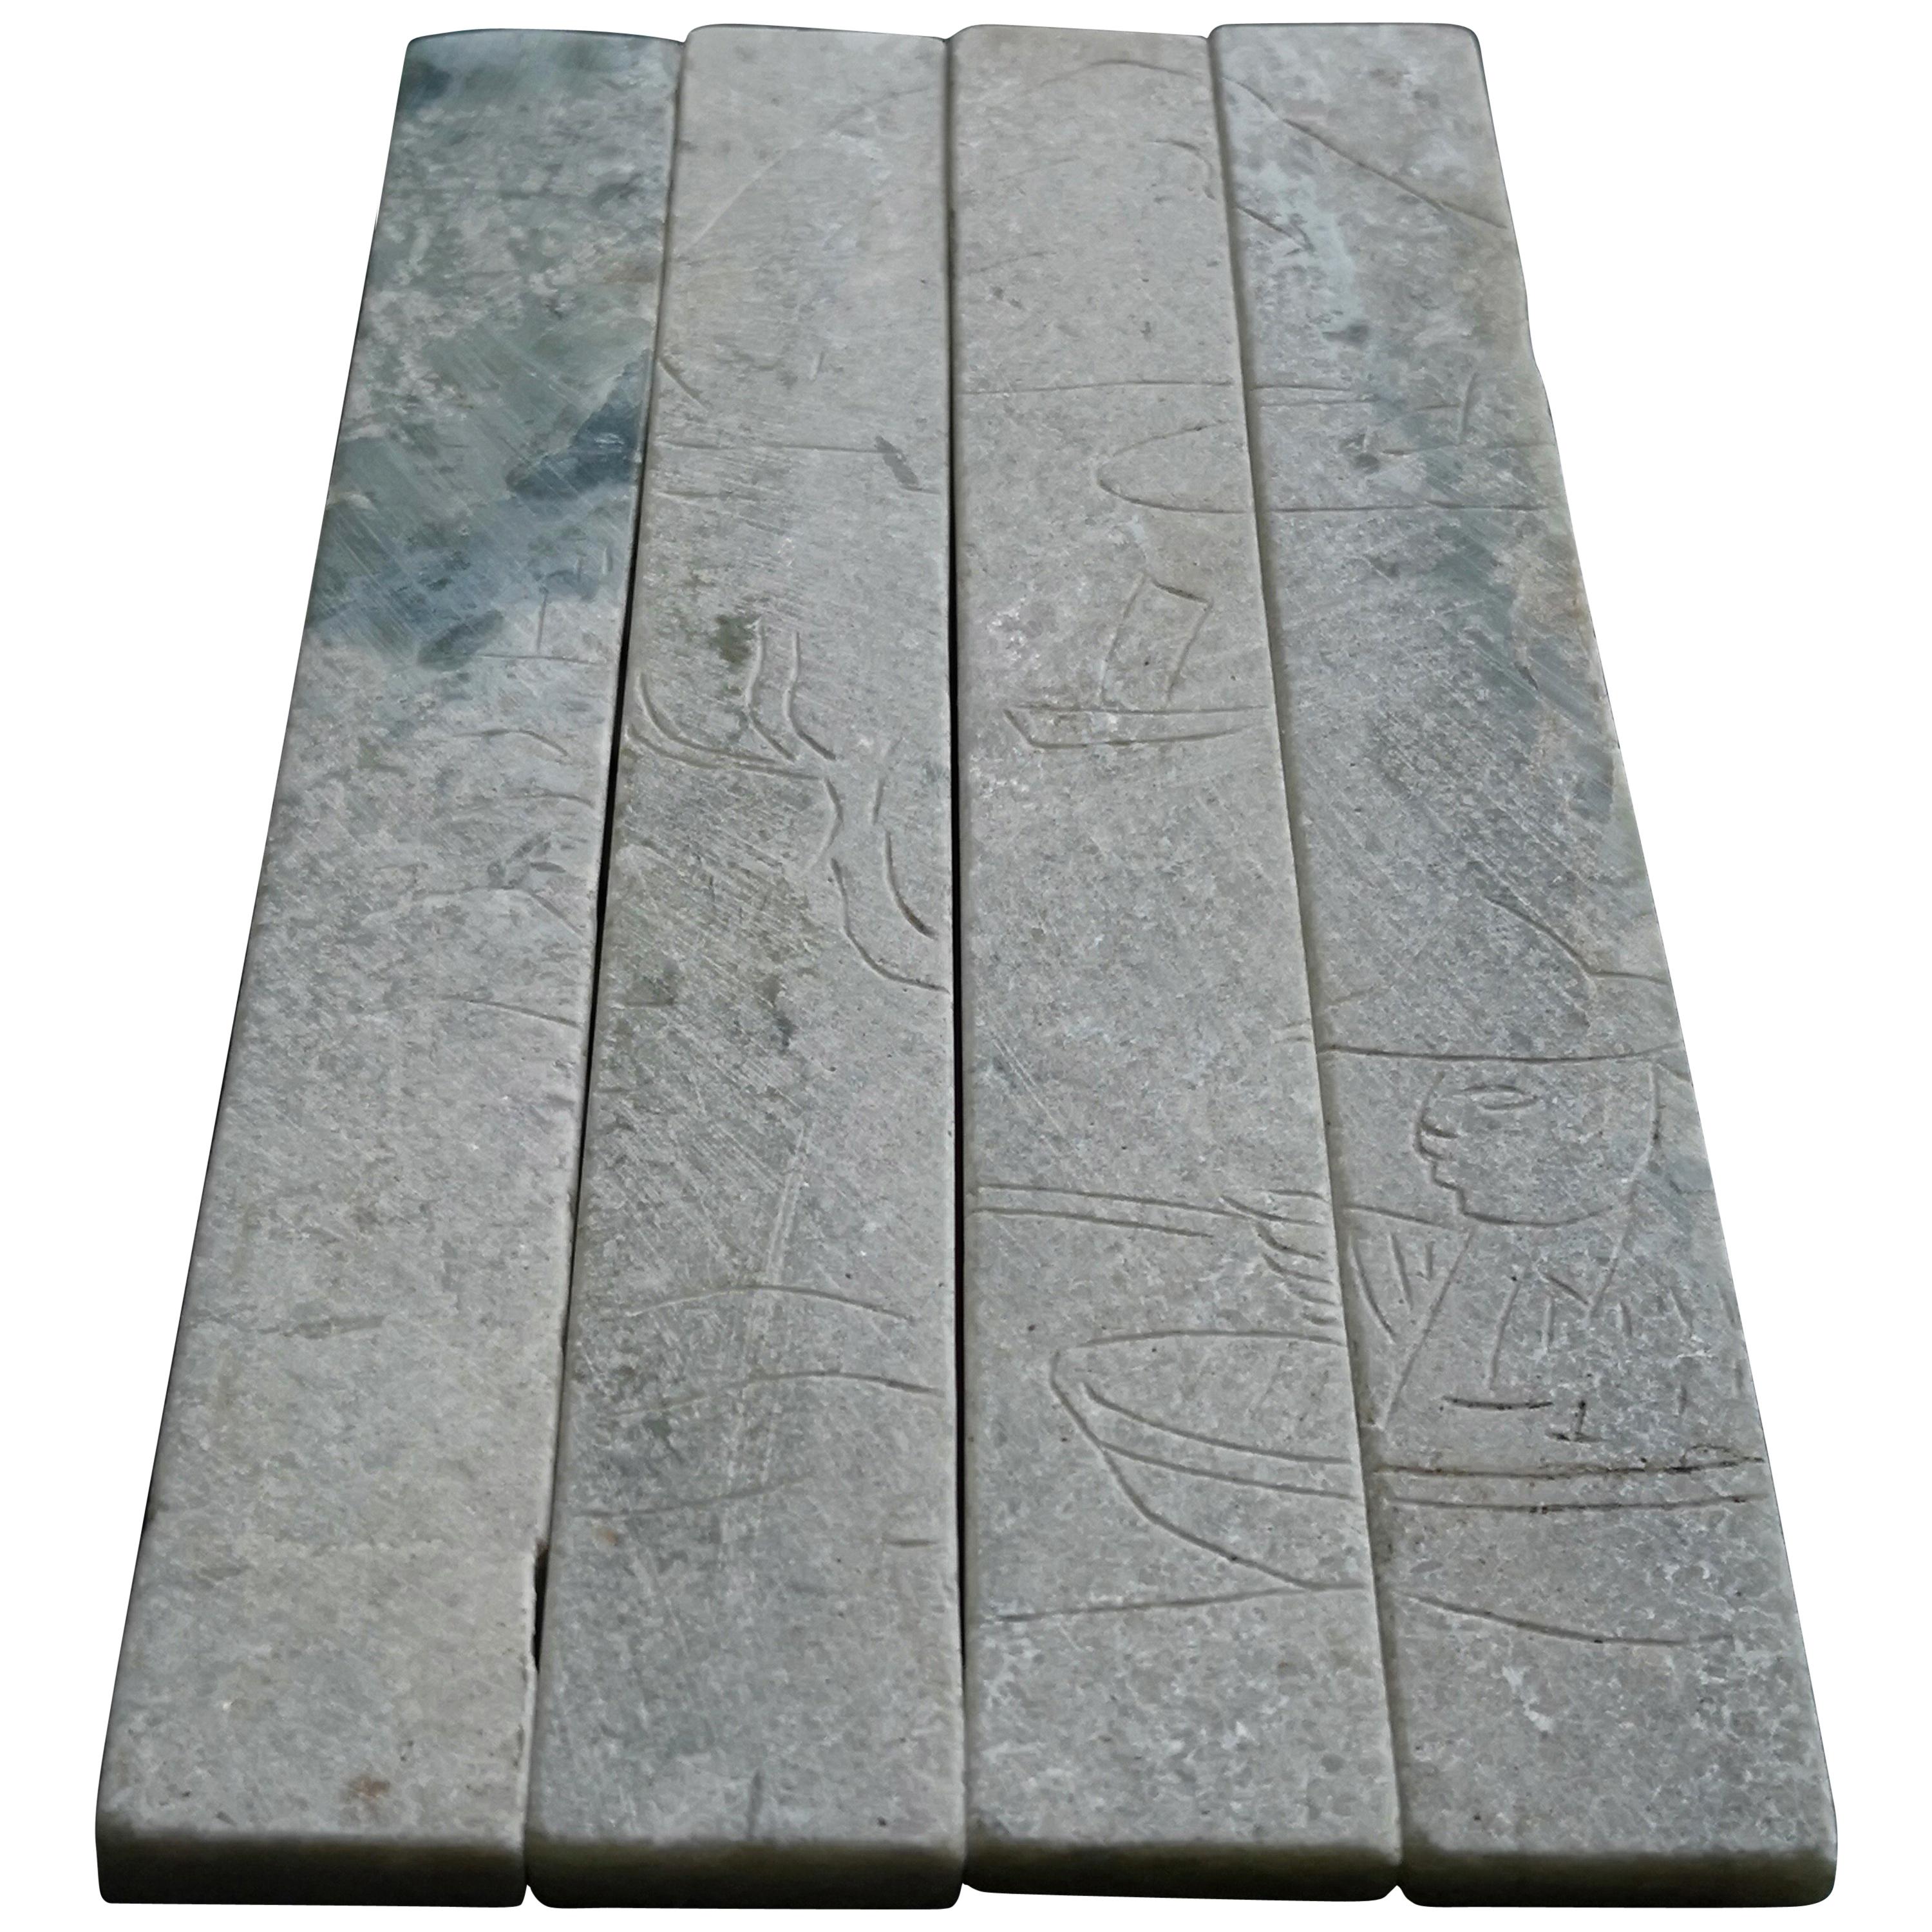 China Ancient Jade Set Four Engraved Tablets, 475-221 BC